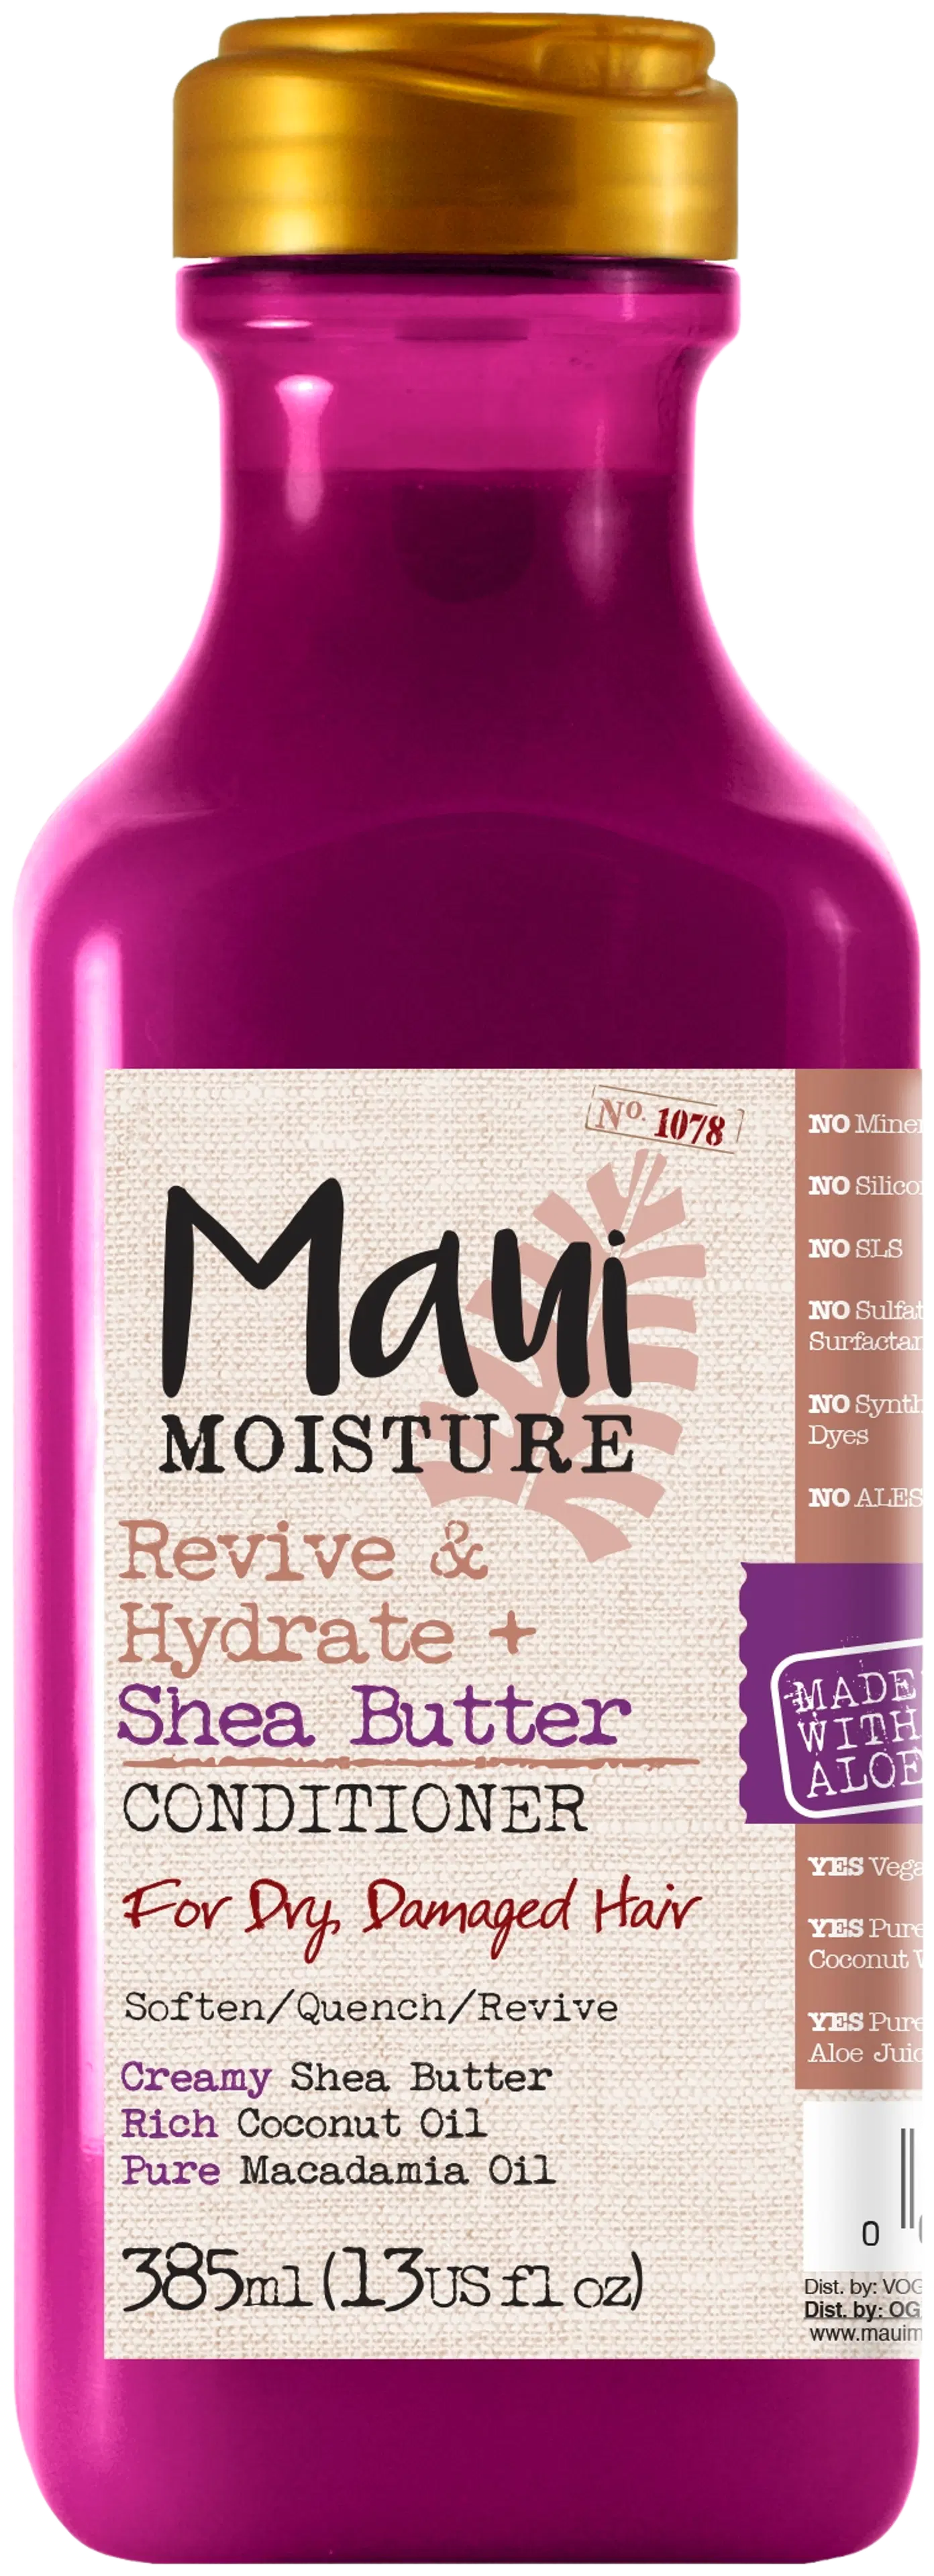 Maui Moisture Shea Butter Hiustenhoitoaine 385ml